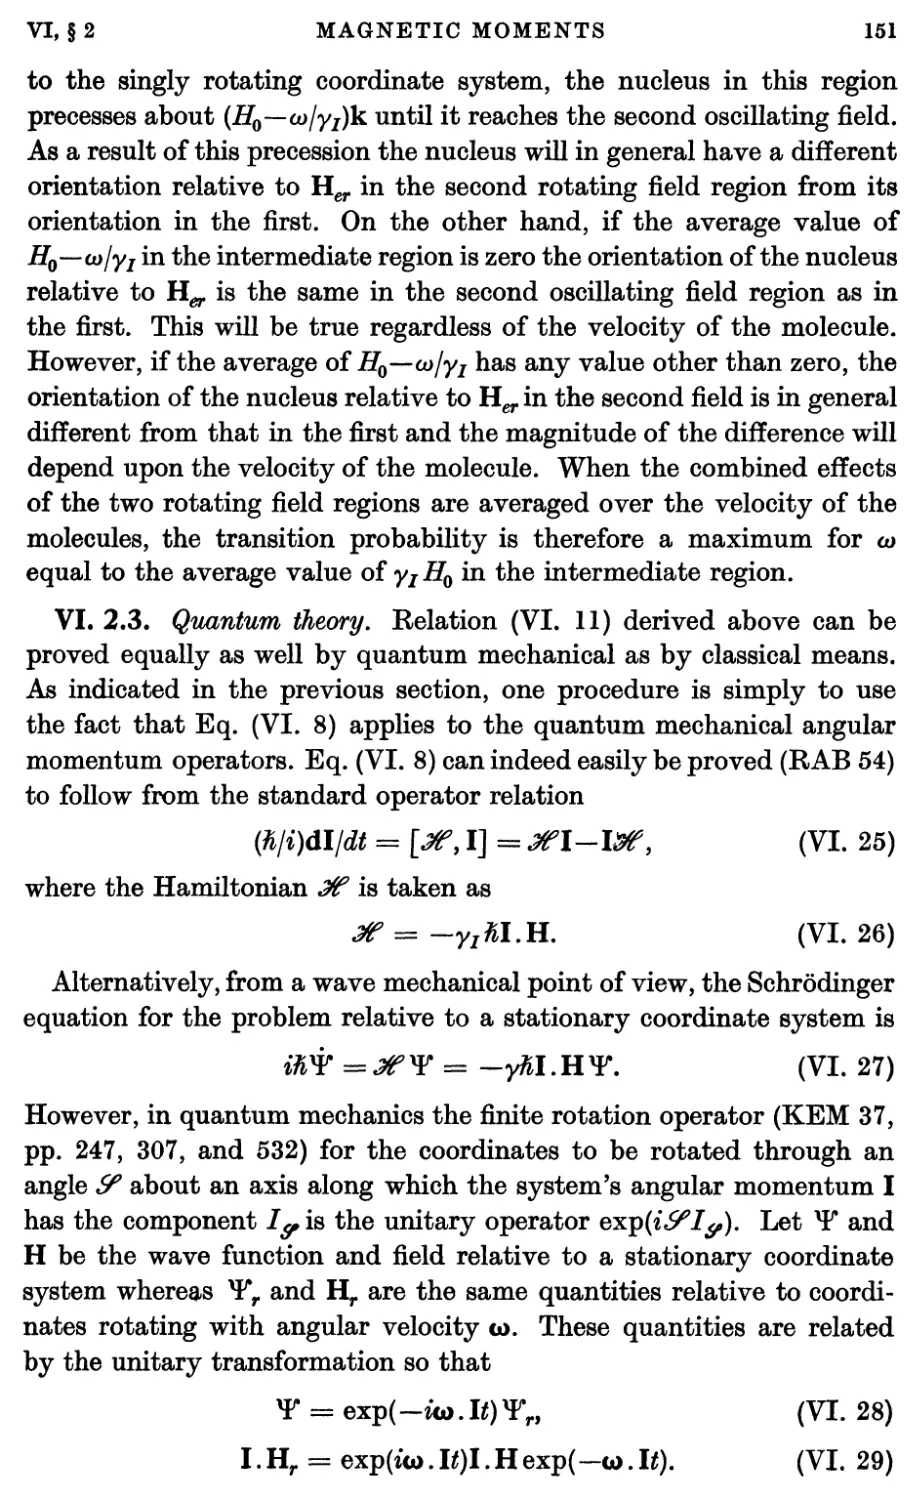 VI.2.3. Quantum theory